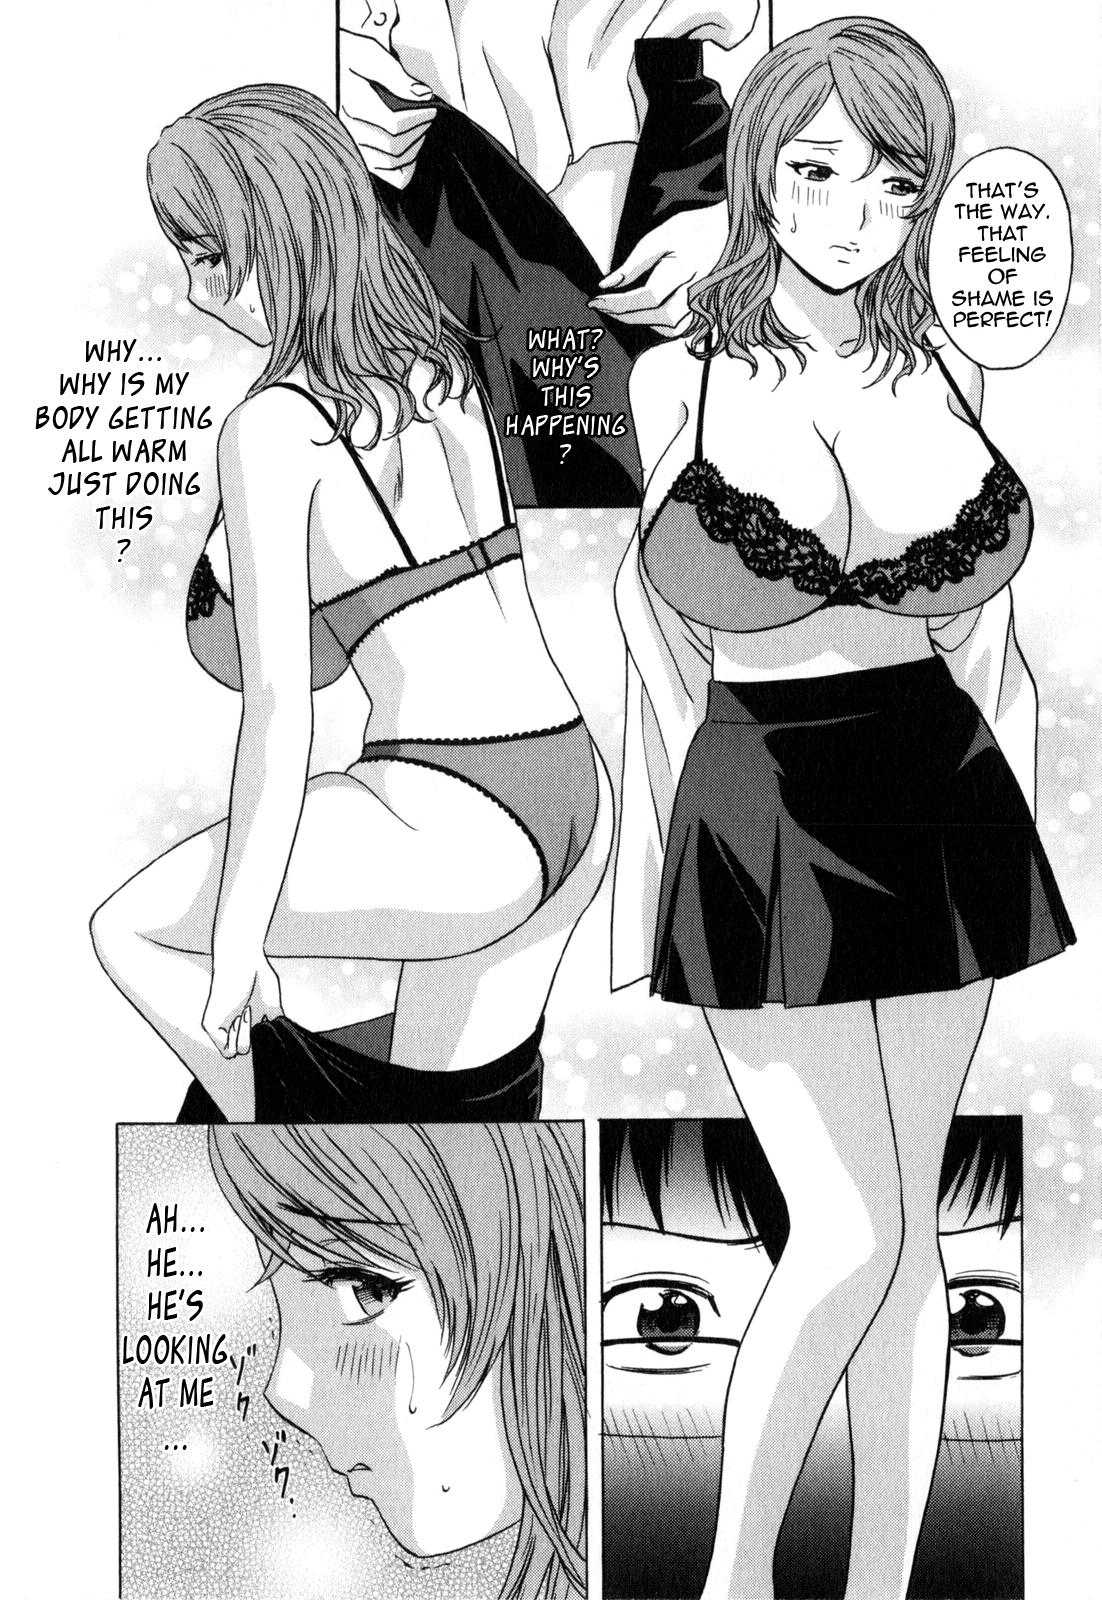 [Hidemaru] Life with Married Women Just Like a Manga 2 - Ch. 1-7 [English] {Tadanohito} 36